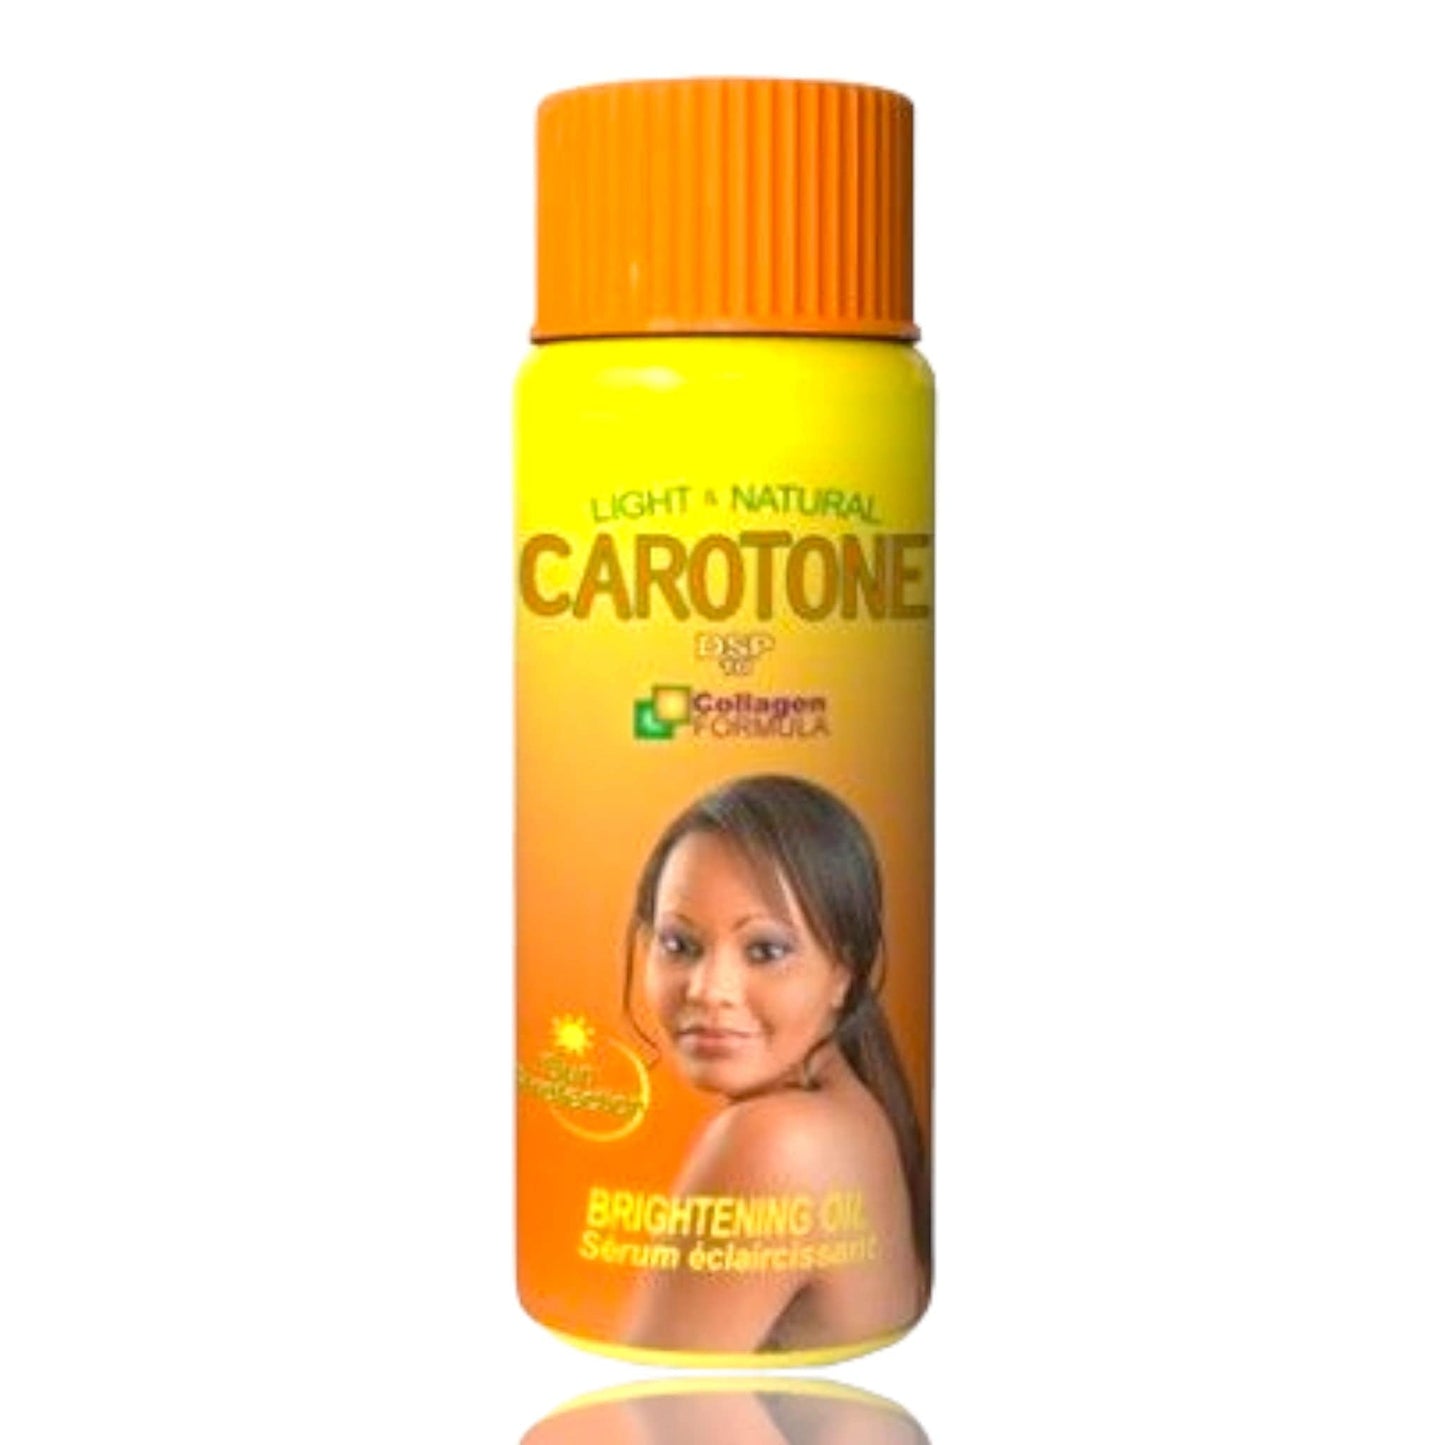 Light & Natural Carotone Dsp 10 Collagen Formula